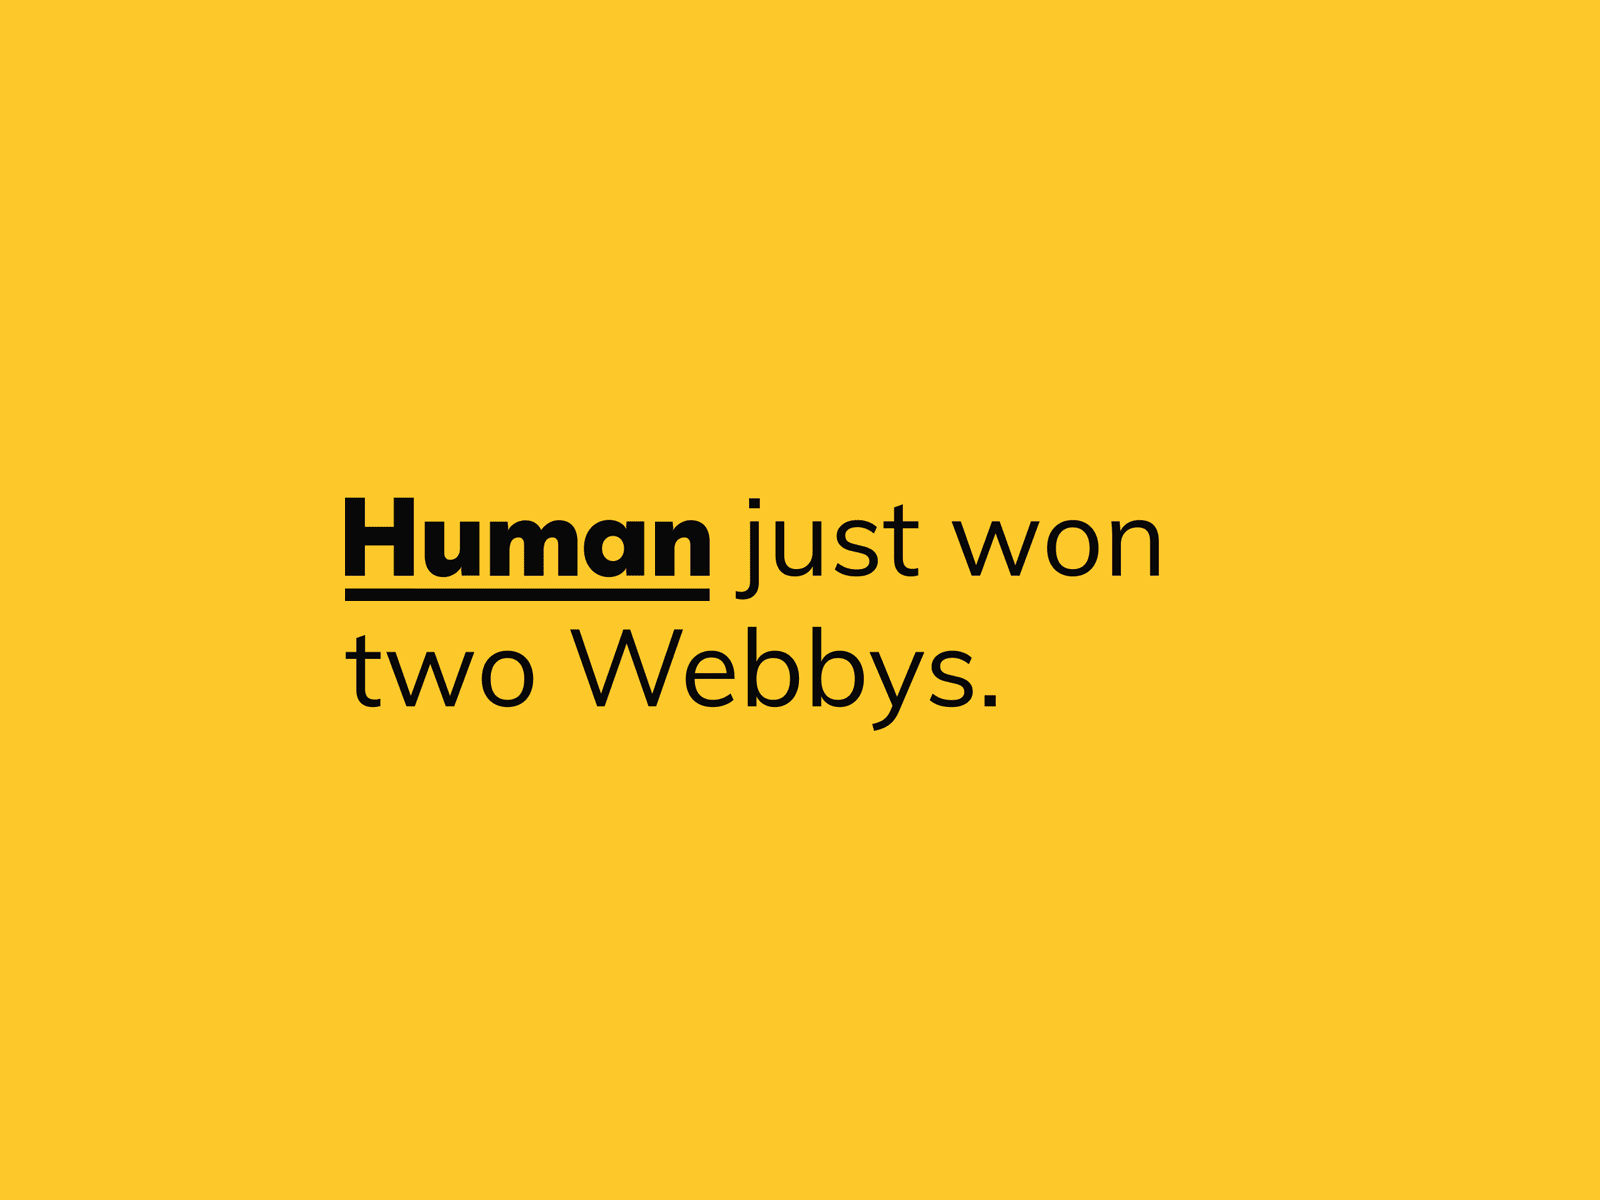 We won two Webbys award awards branding content design human ui user experience user interface ux webby webbyaward website